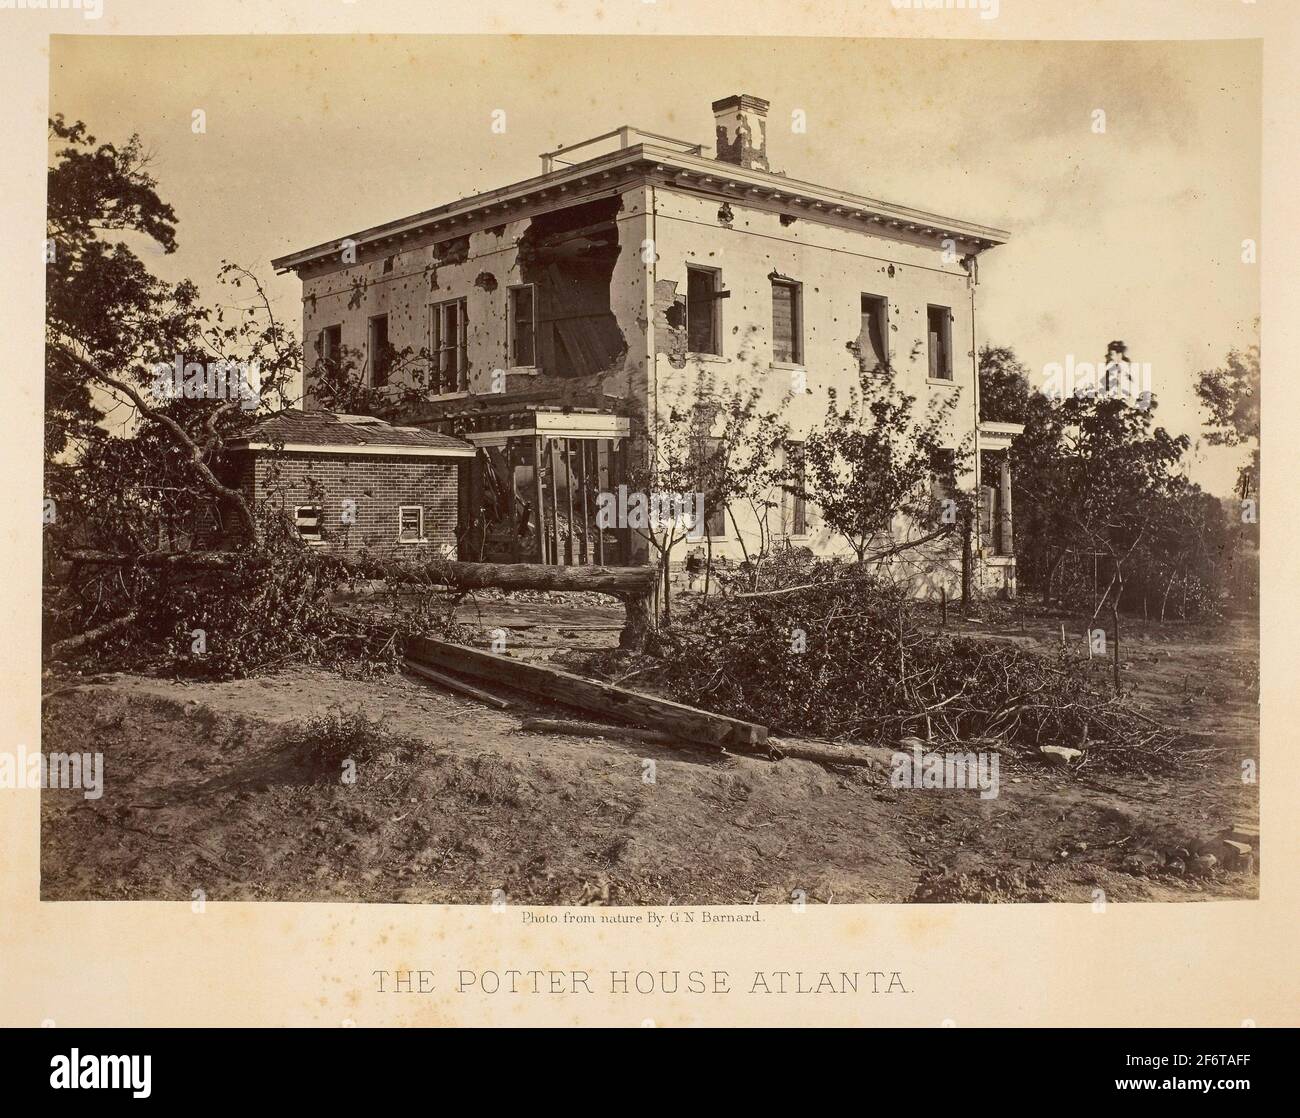 Author: George N. Barnard. The Potter House Atlanta - 1864 - George N. Barnard American, 1819'1902. Albumen print, plate 38 from the album Stock Photo